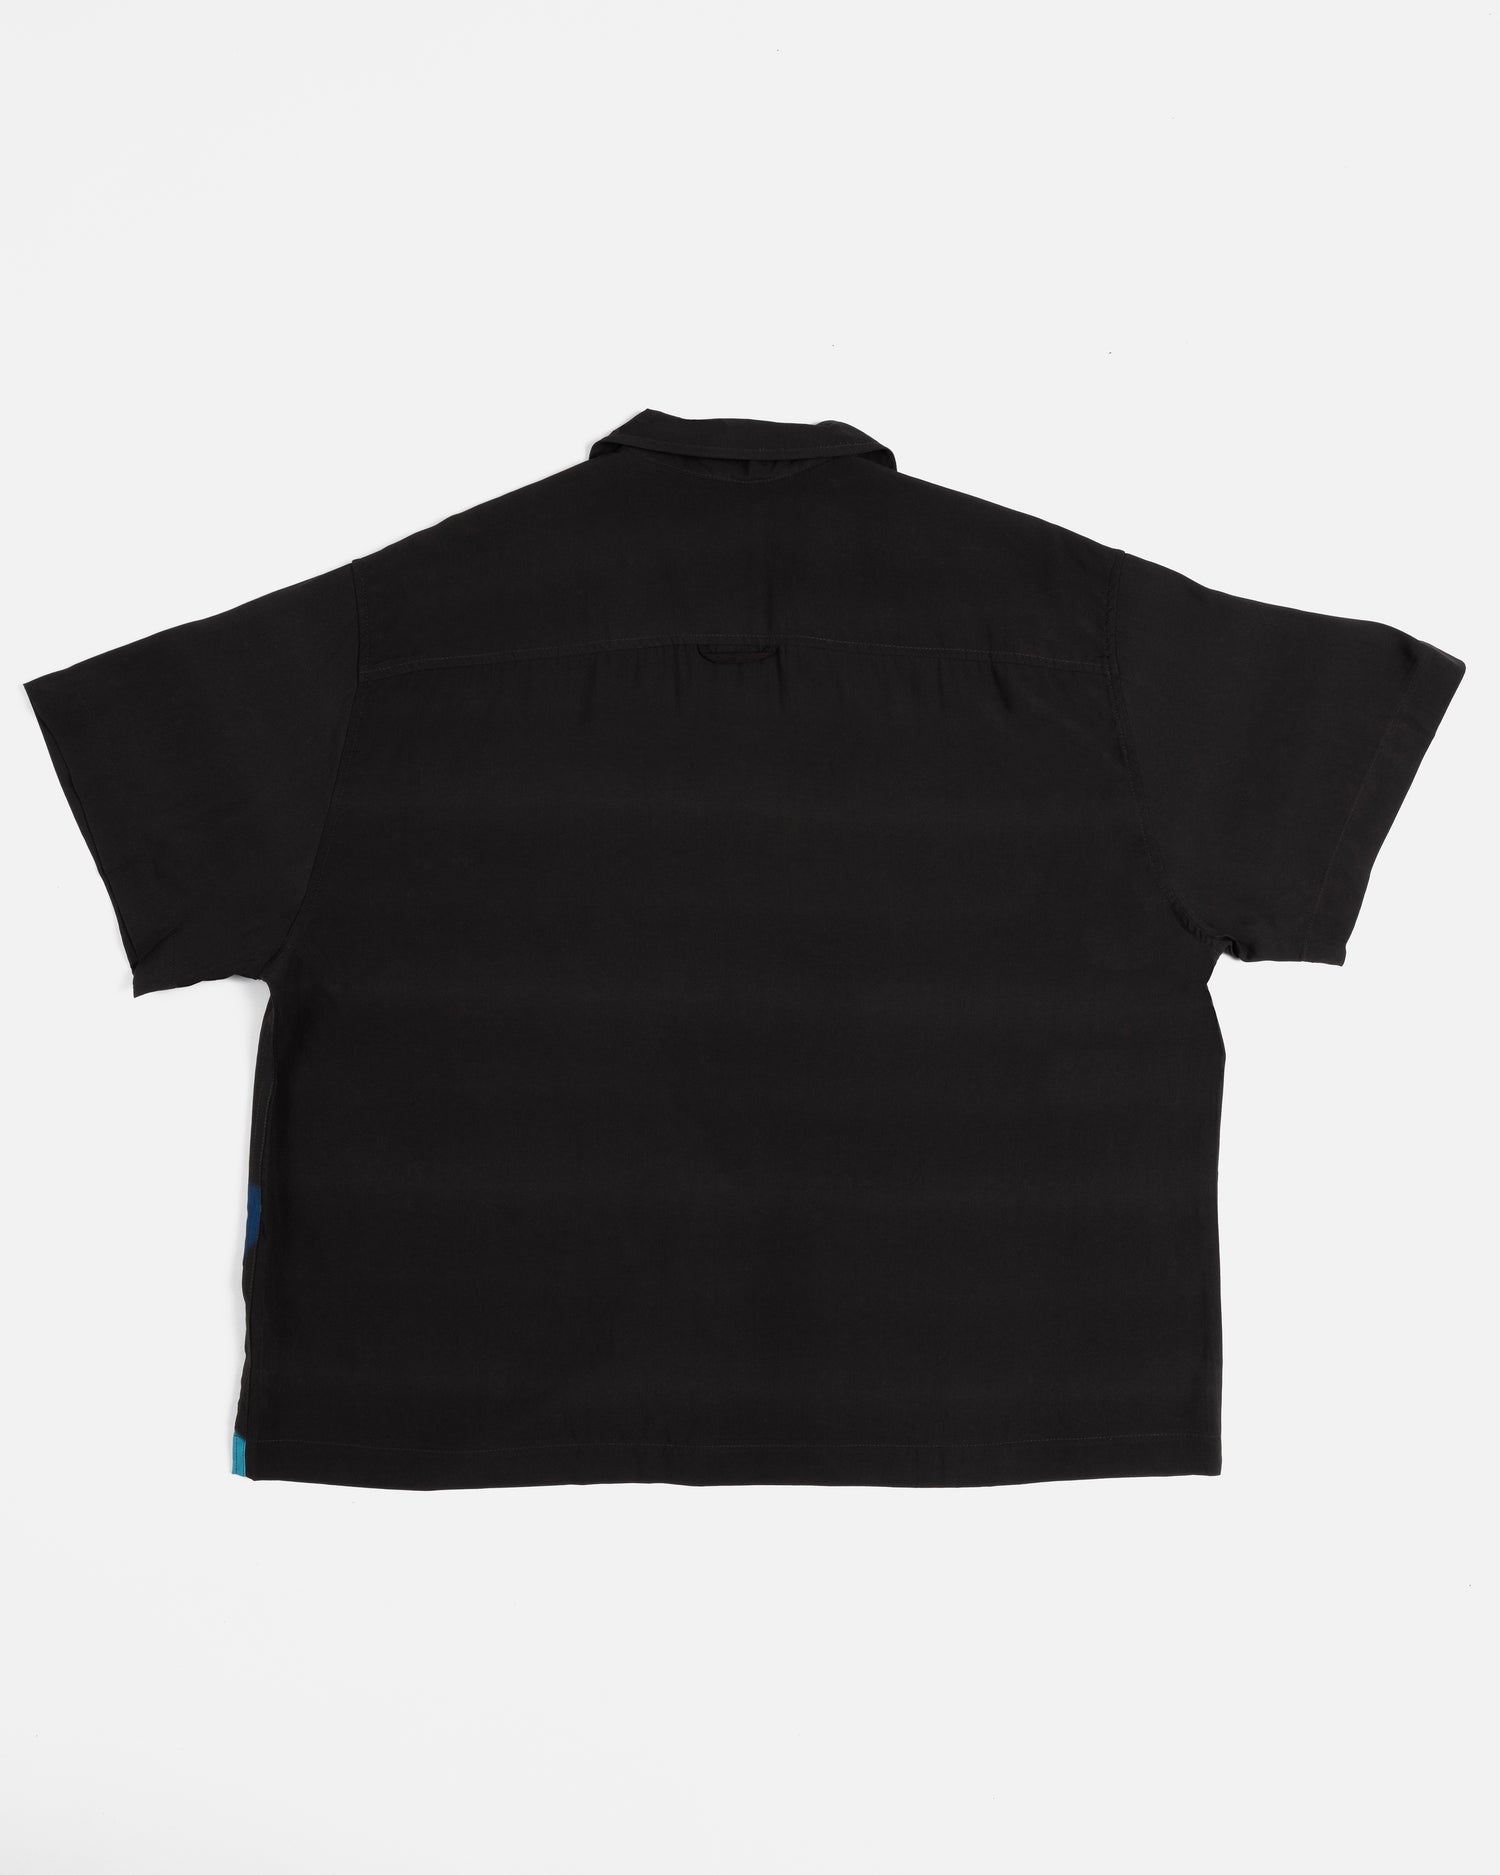 Awake NY X Gil Scott Heron Camp Shirt (Black)